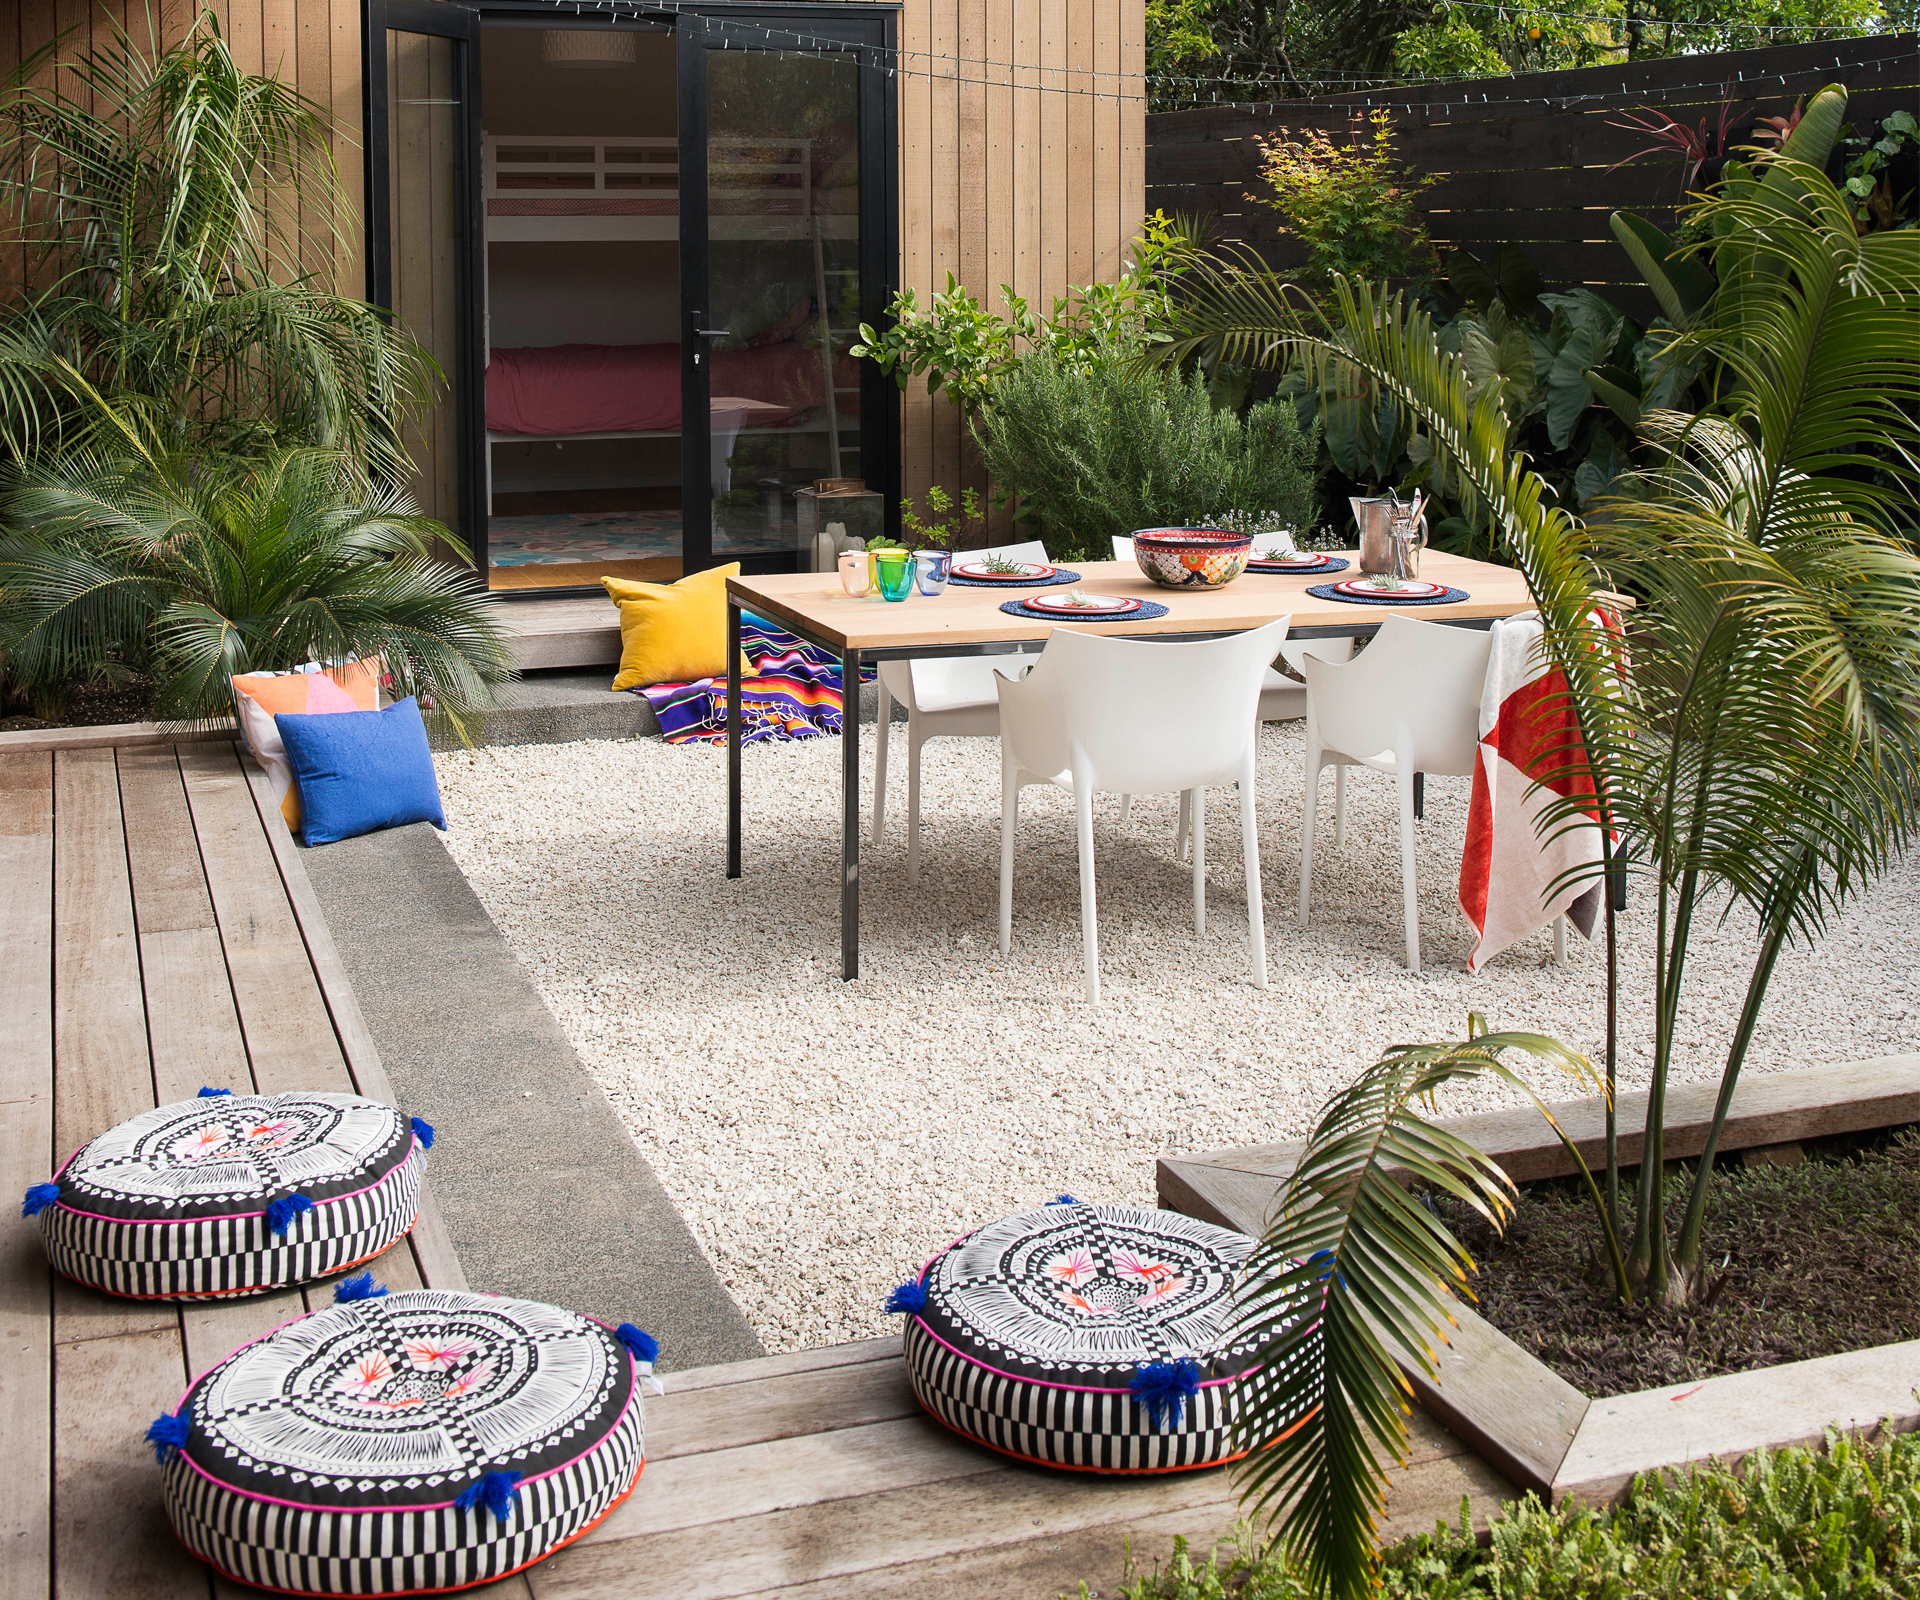 Step inside the coolest compact courtyard garden